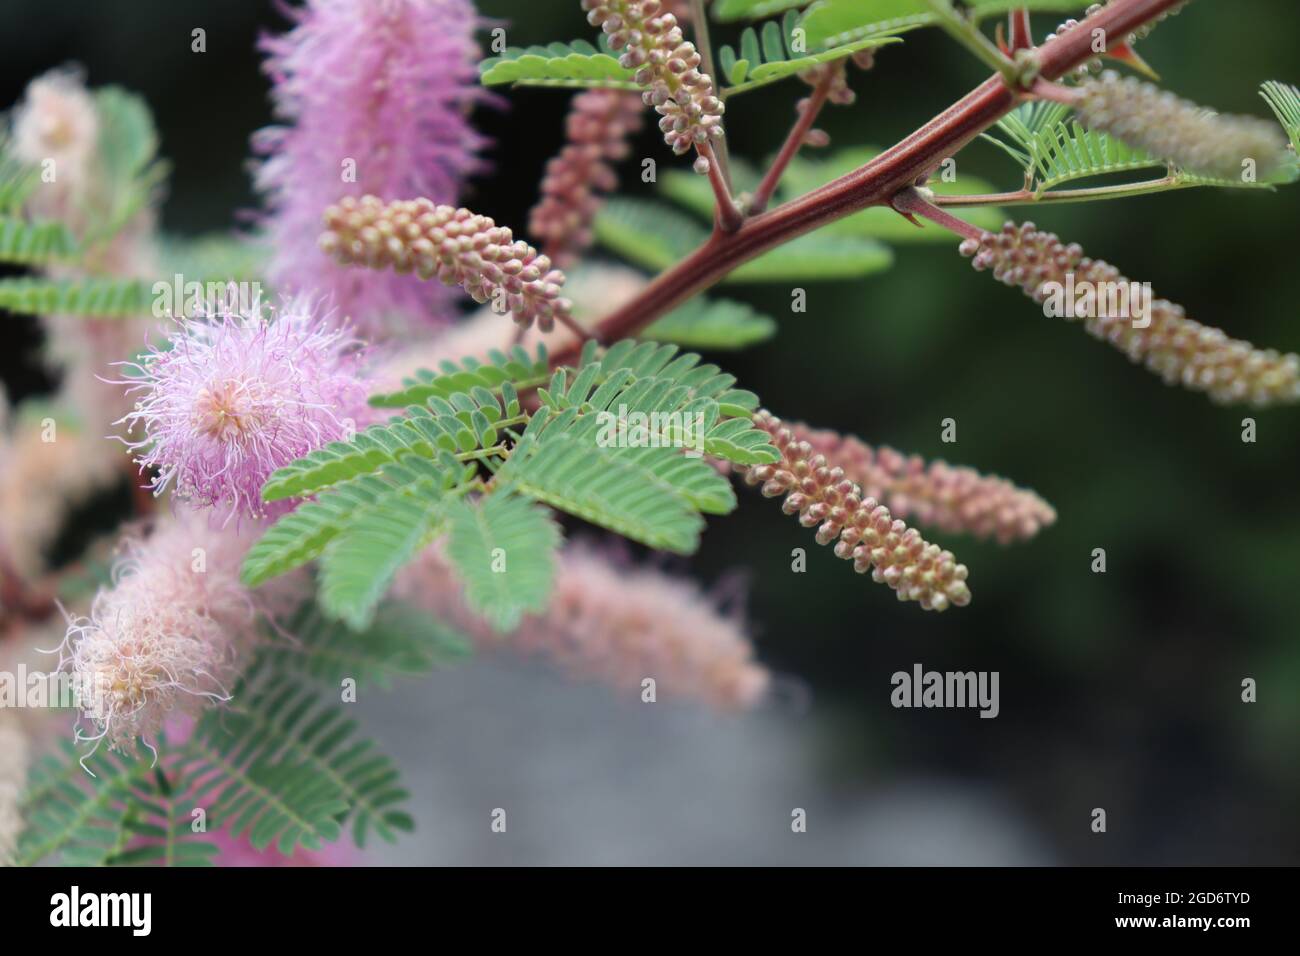 Closeup shot of Mimosa Dysocarpa tree in a garden Stock Photo